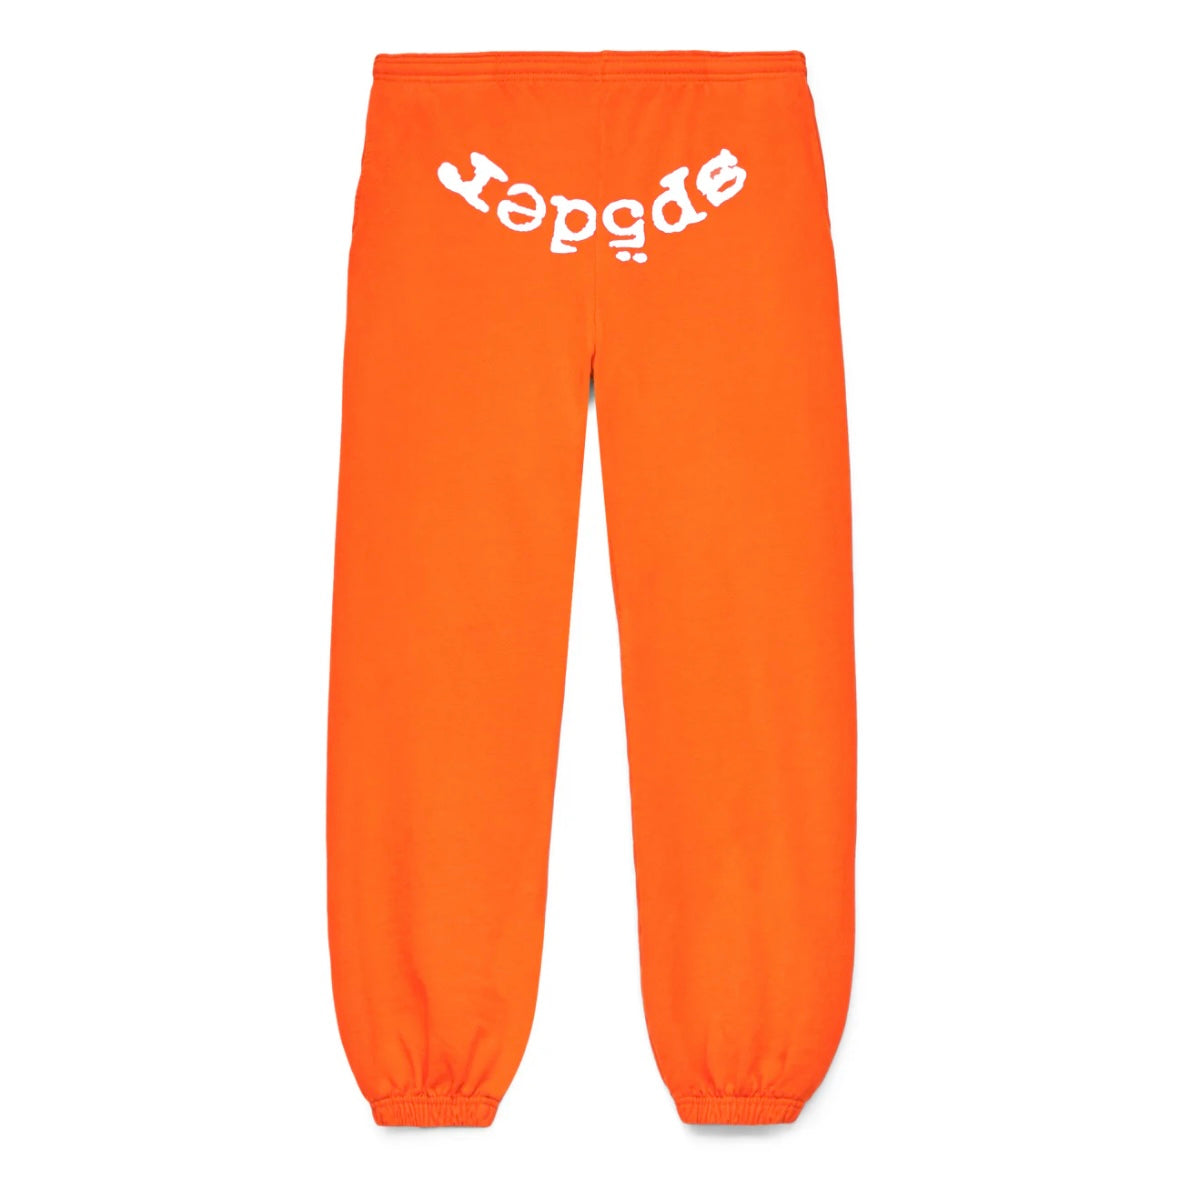 Sp5der Orange White Legacy Sweatpants Front